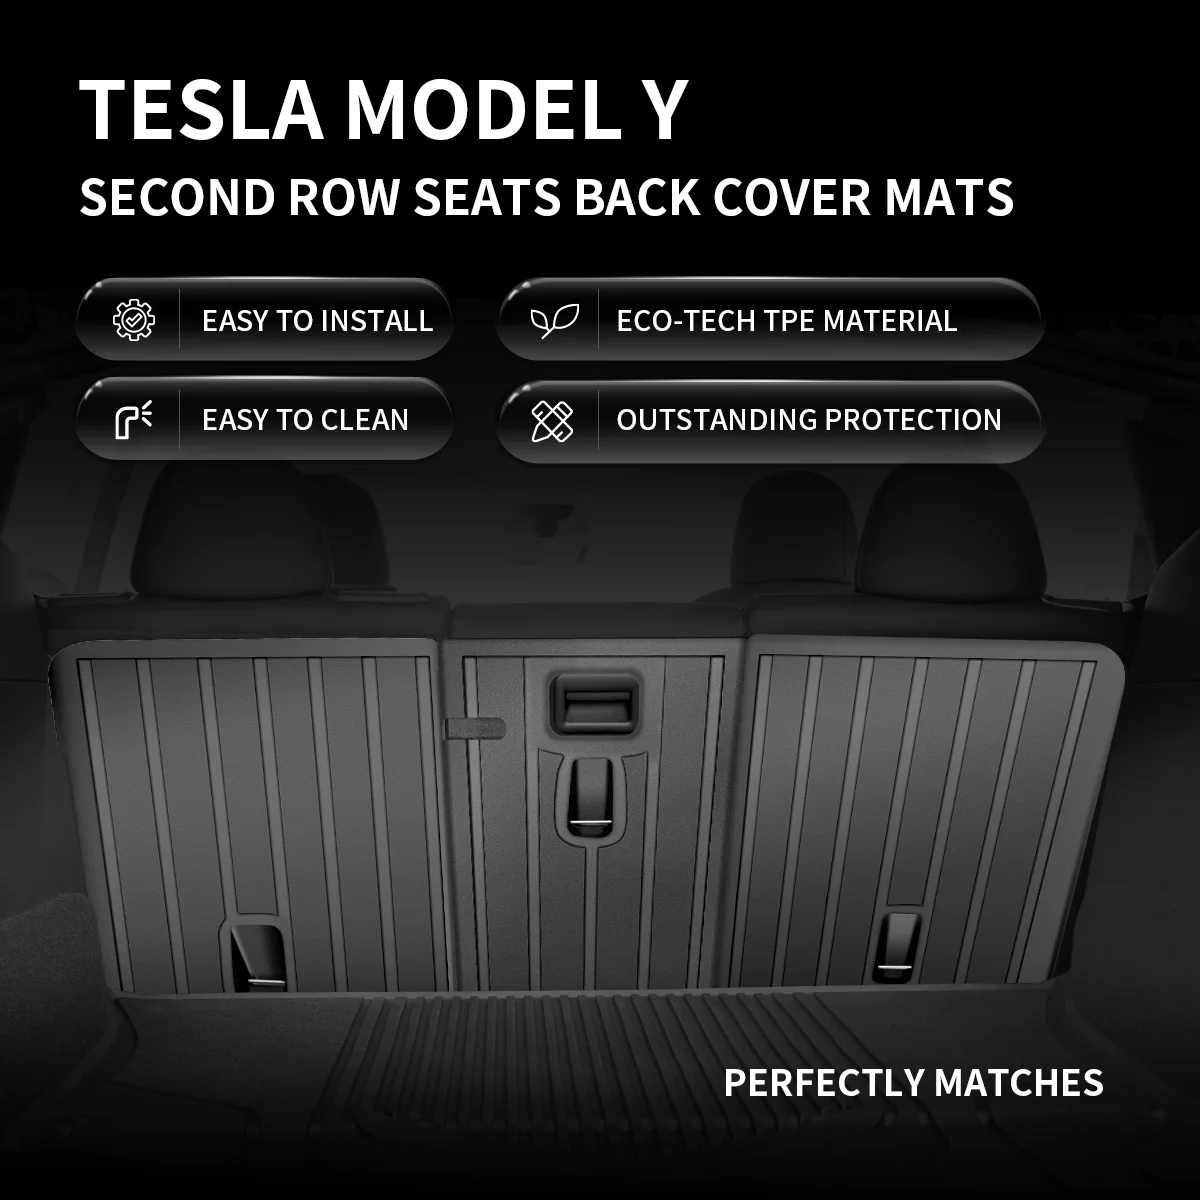 Tesla Model Y second row back mats-1.png